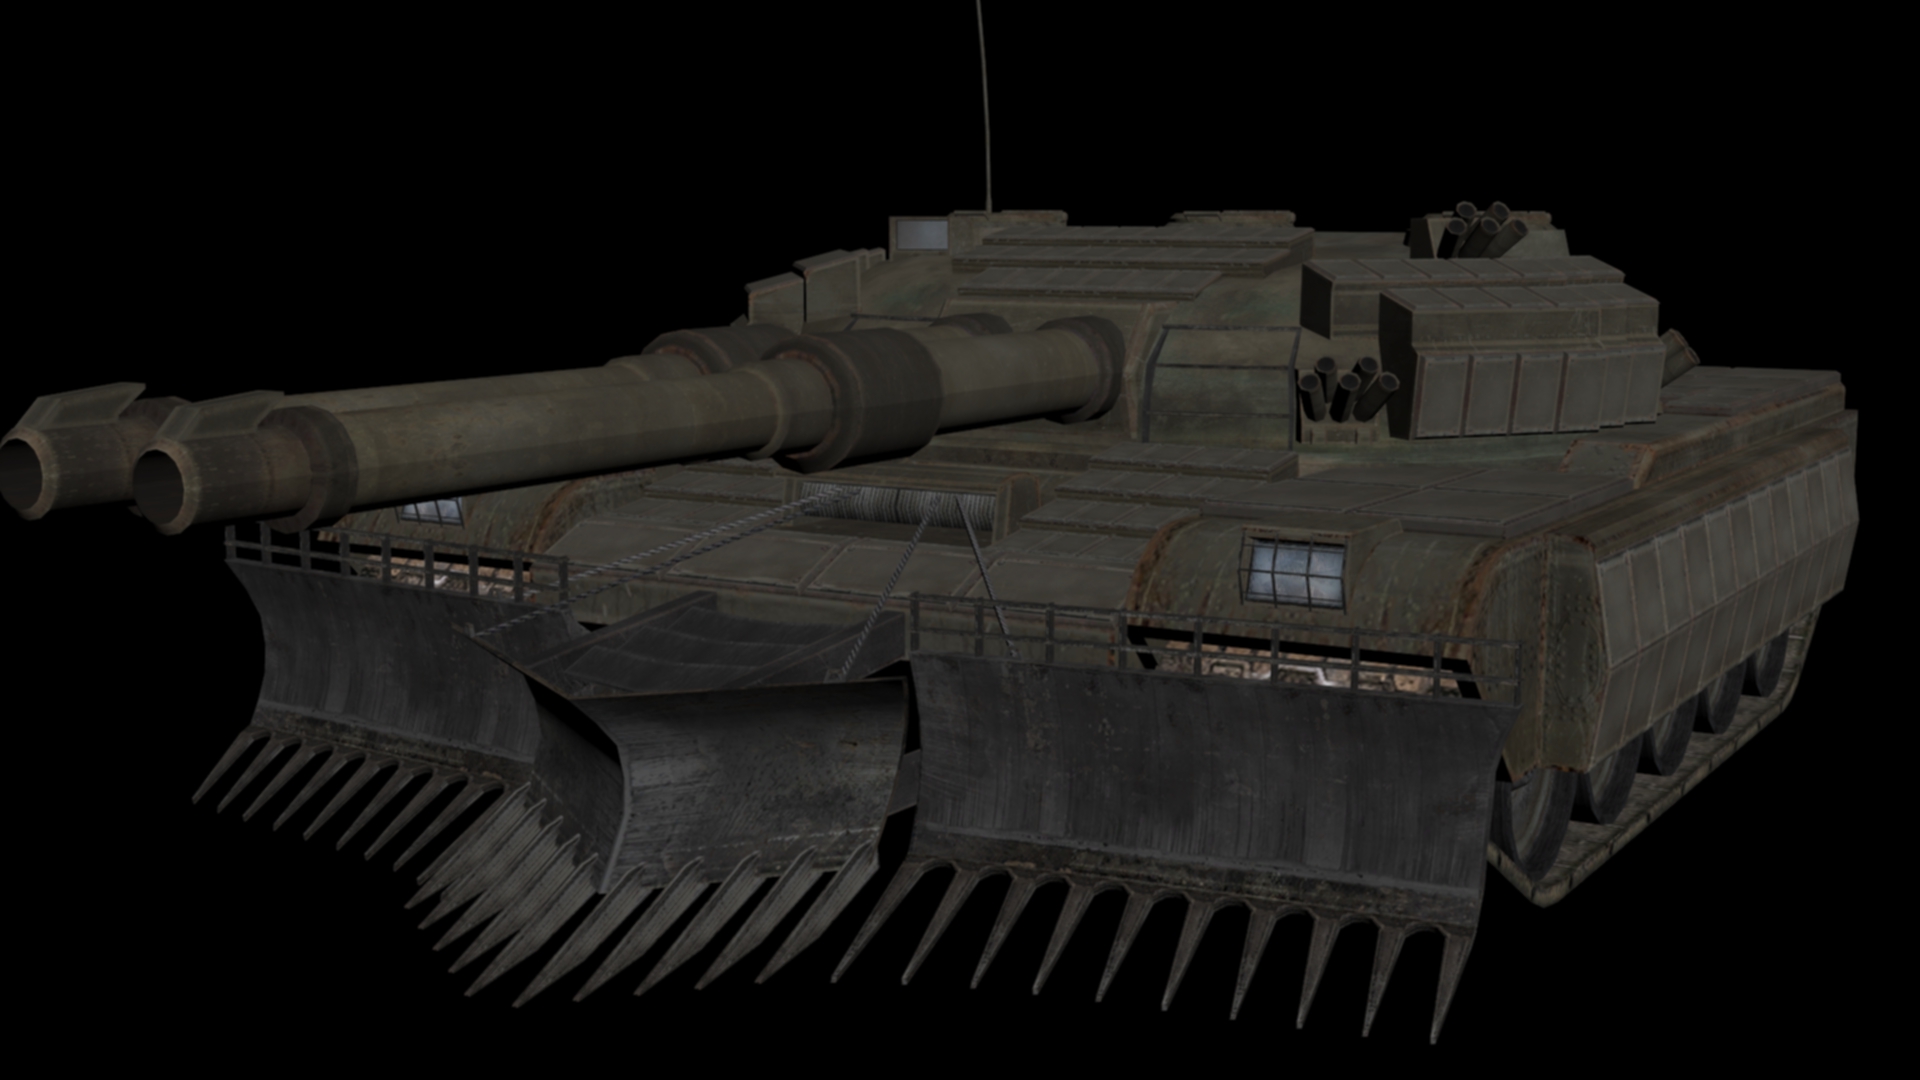 http://images3.wikia.nocookie.net/__cb20130207115638/callofduty/ru/images/6/66/Unknown_Tank_BOII_Model.jpg